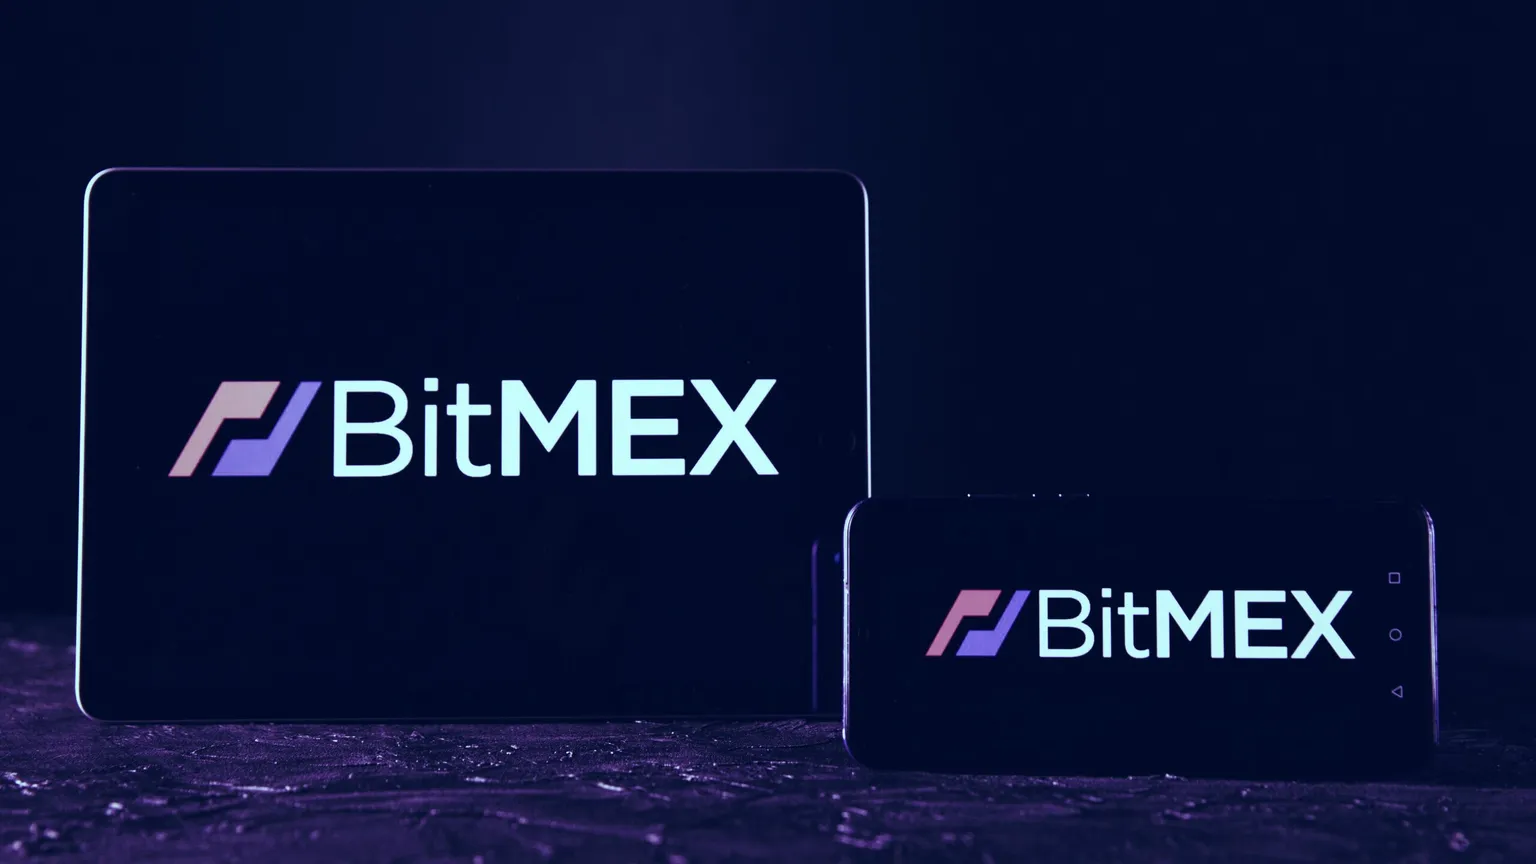 BitMEX is a Bitcoin futures exchange. Image: Shutterstock.